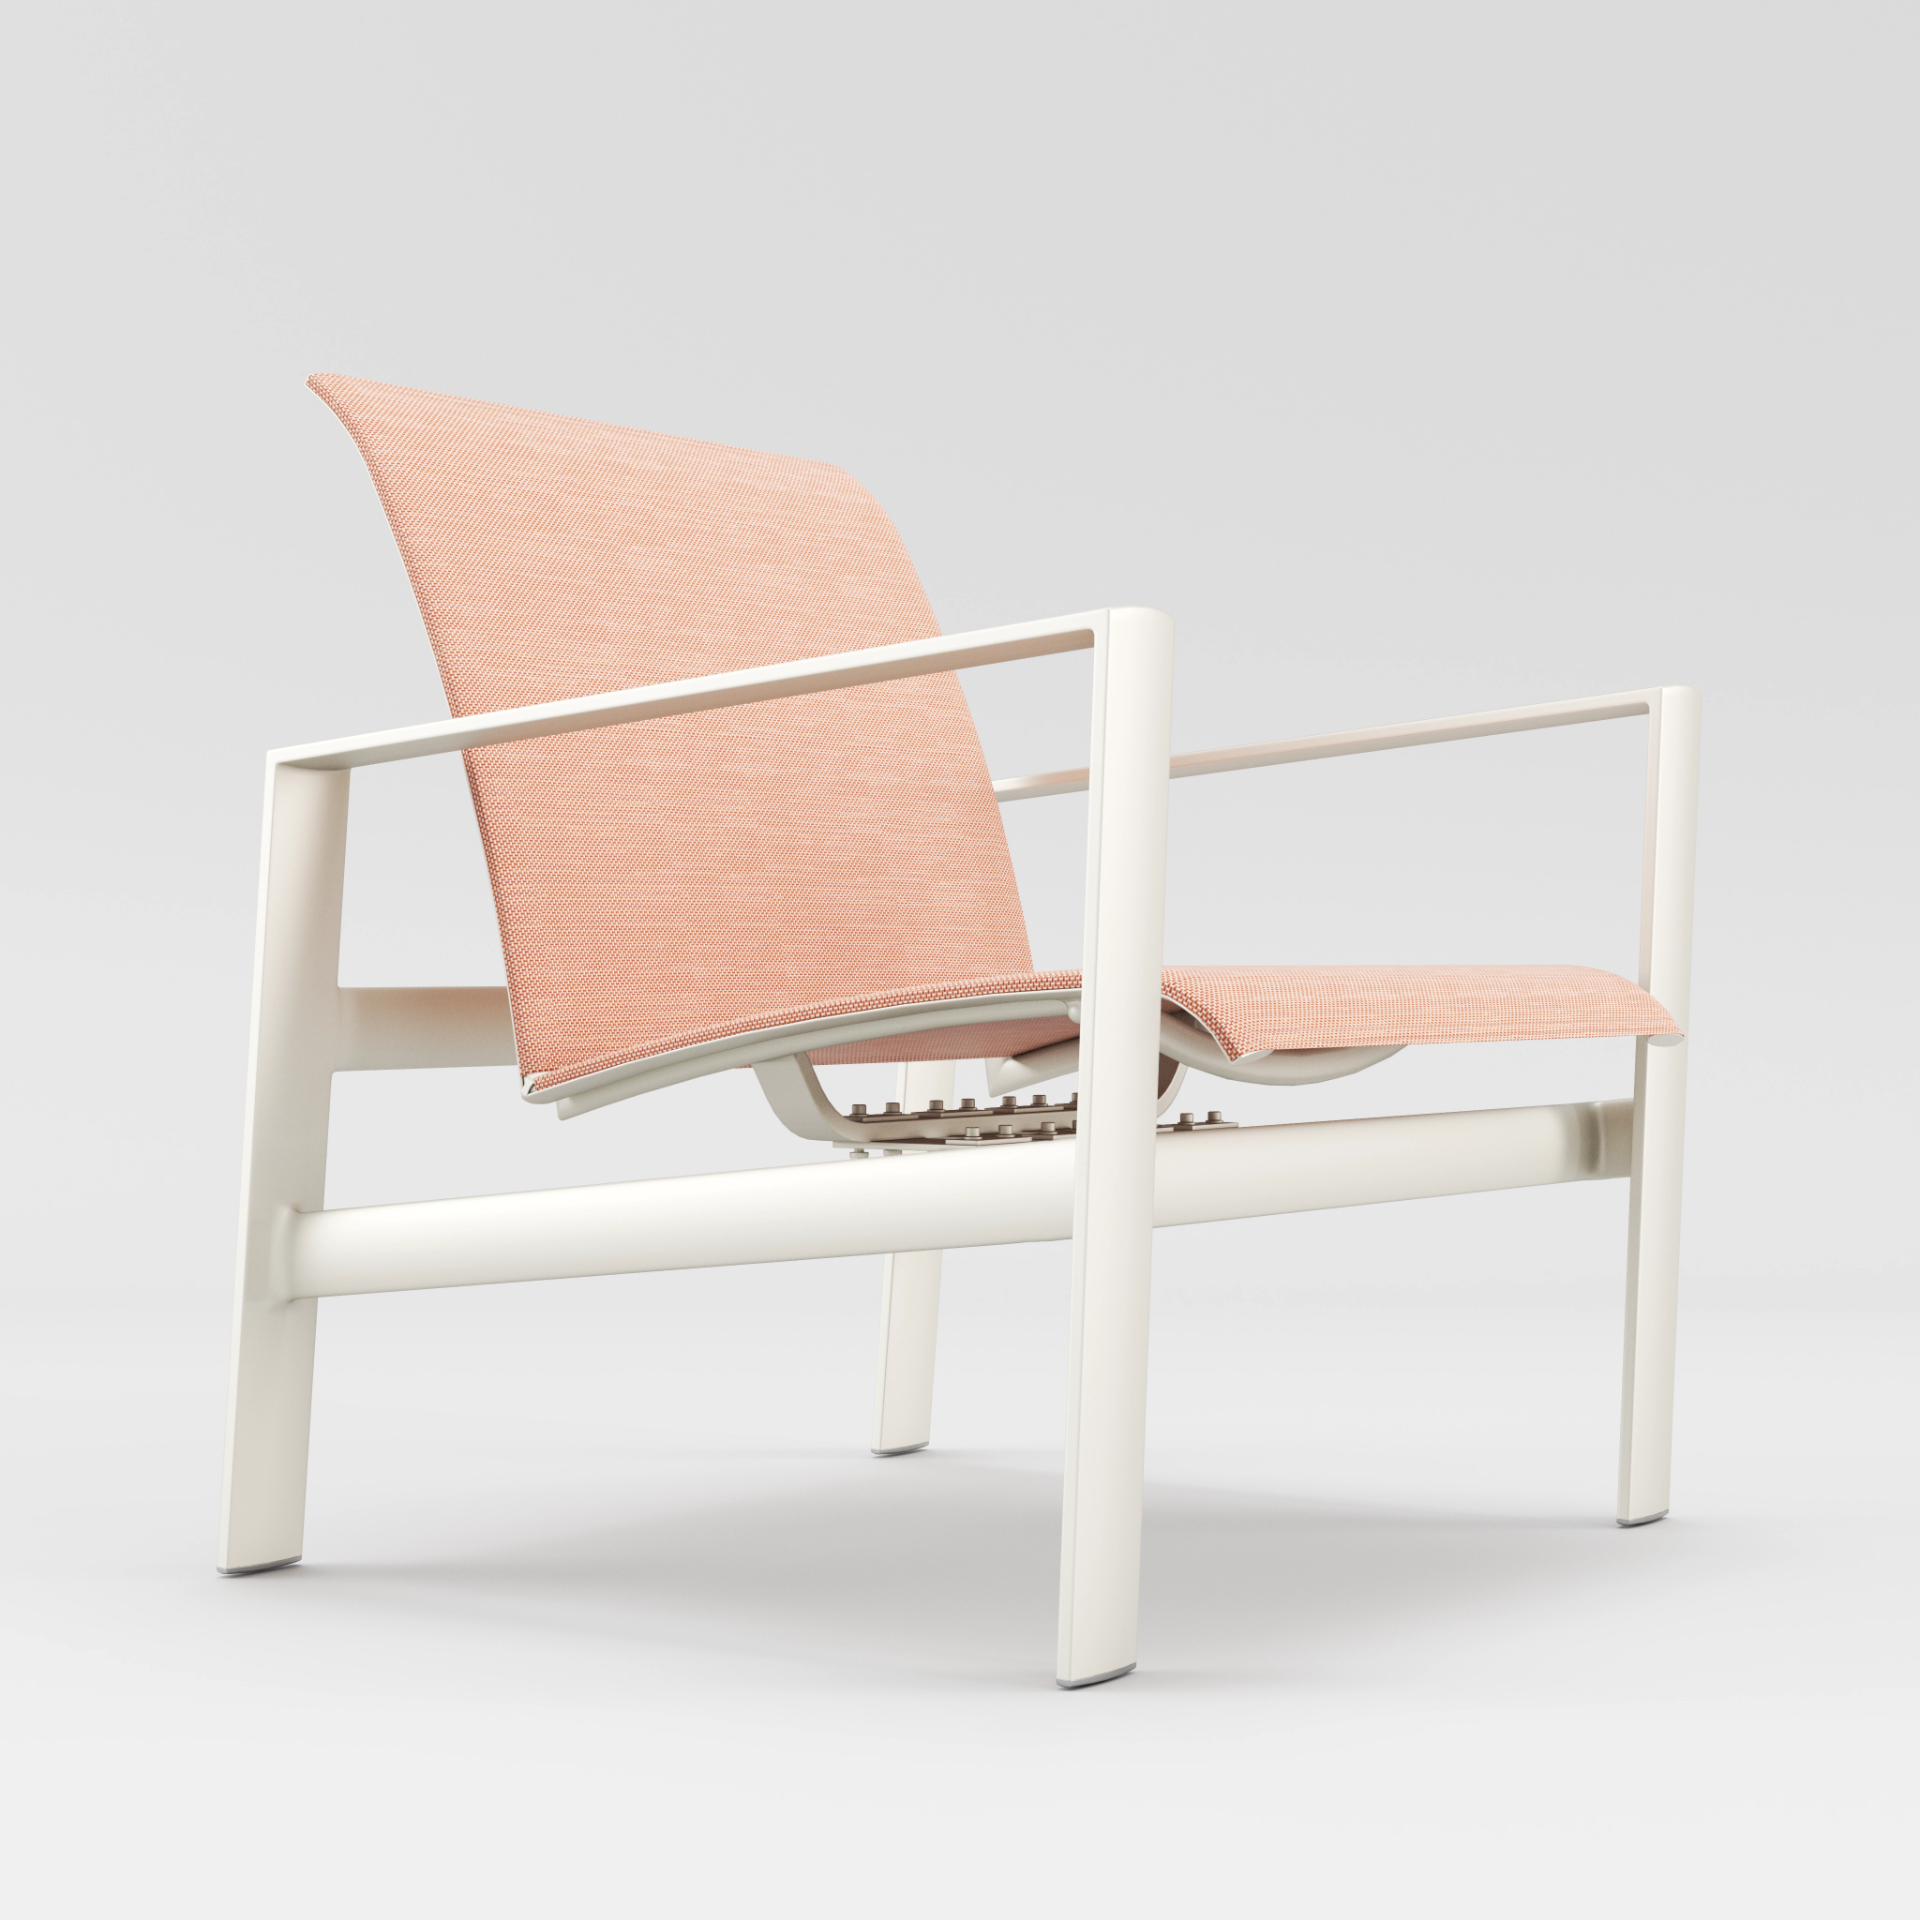 Parkway Sling Motion Lounge Chair by Brown Jordan